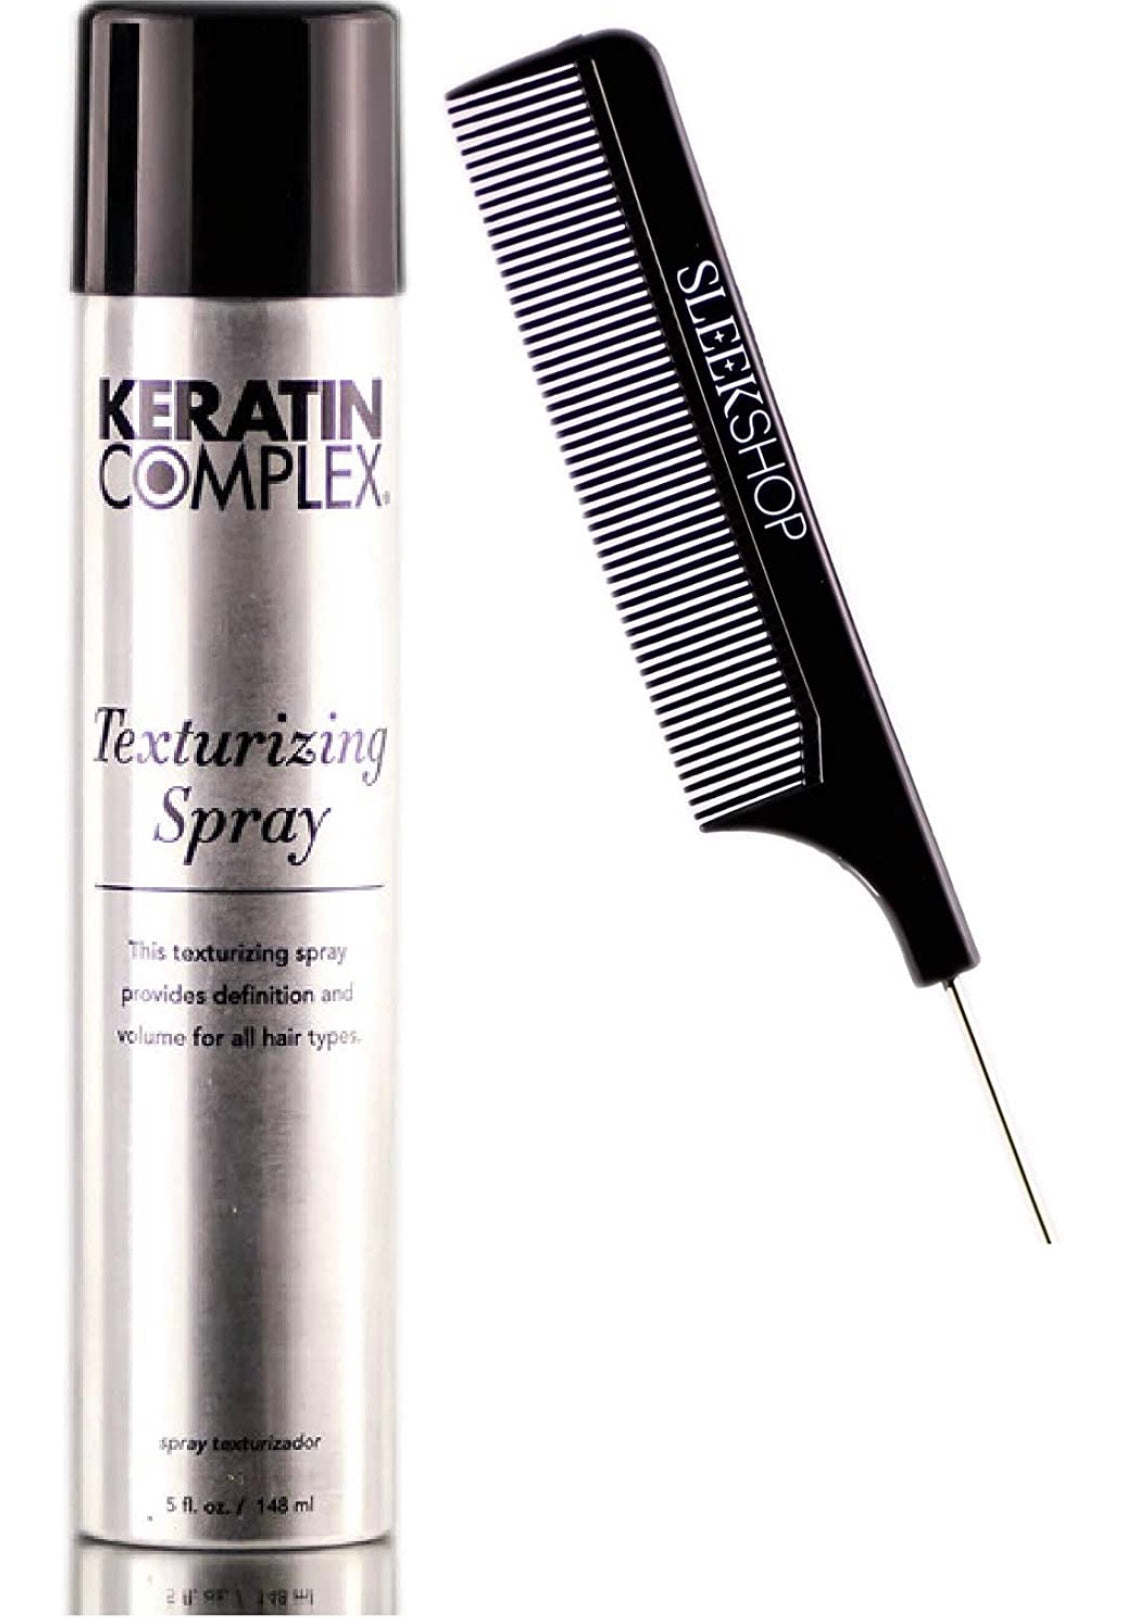 Keratin complex - Texturizing spray 5 fl. oz./ 148 ml